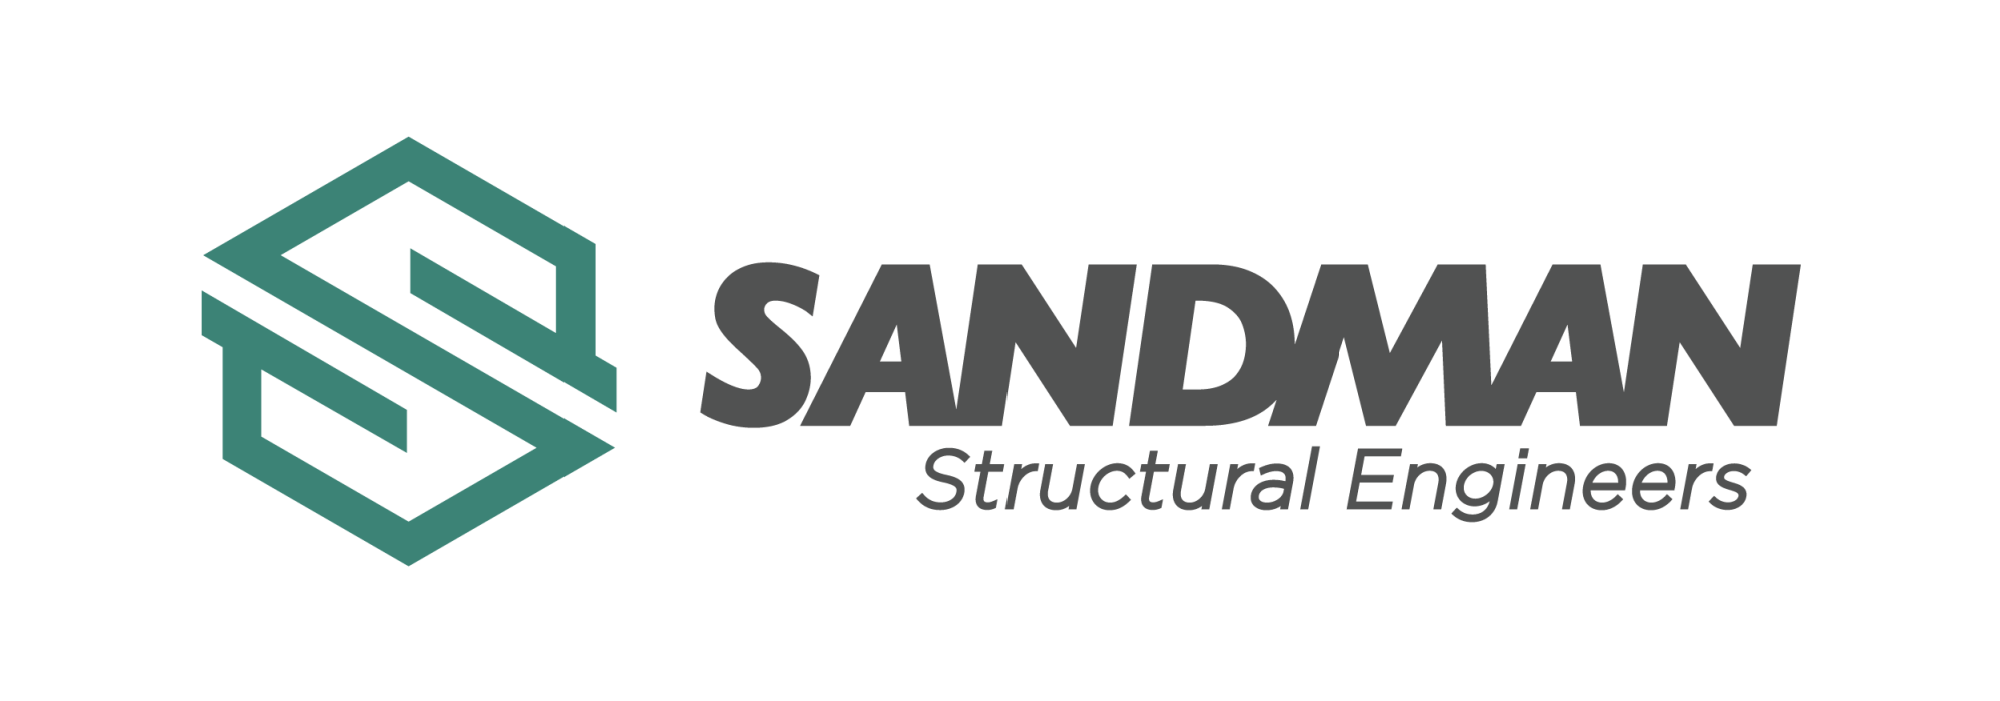 Sandman Structural Engineers Logo